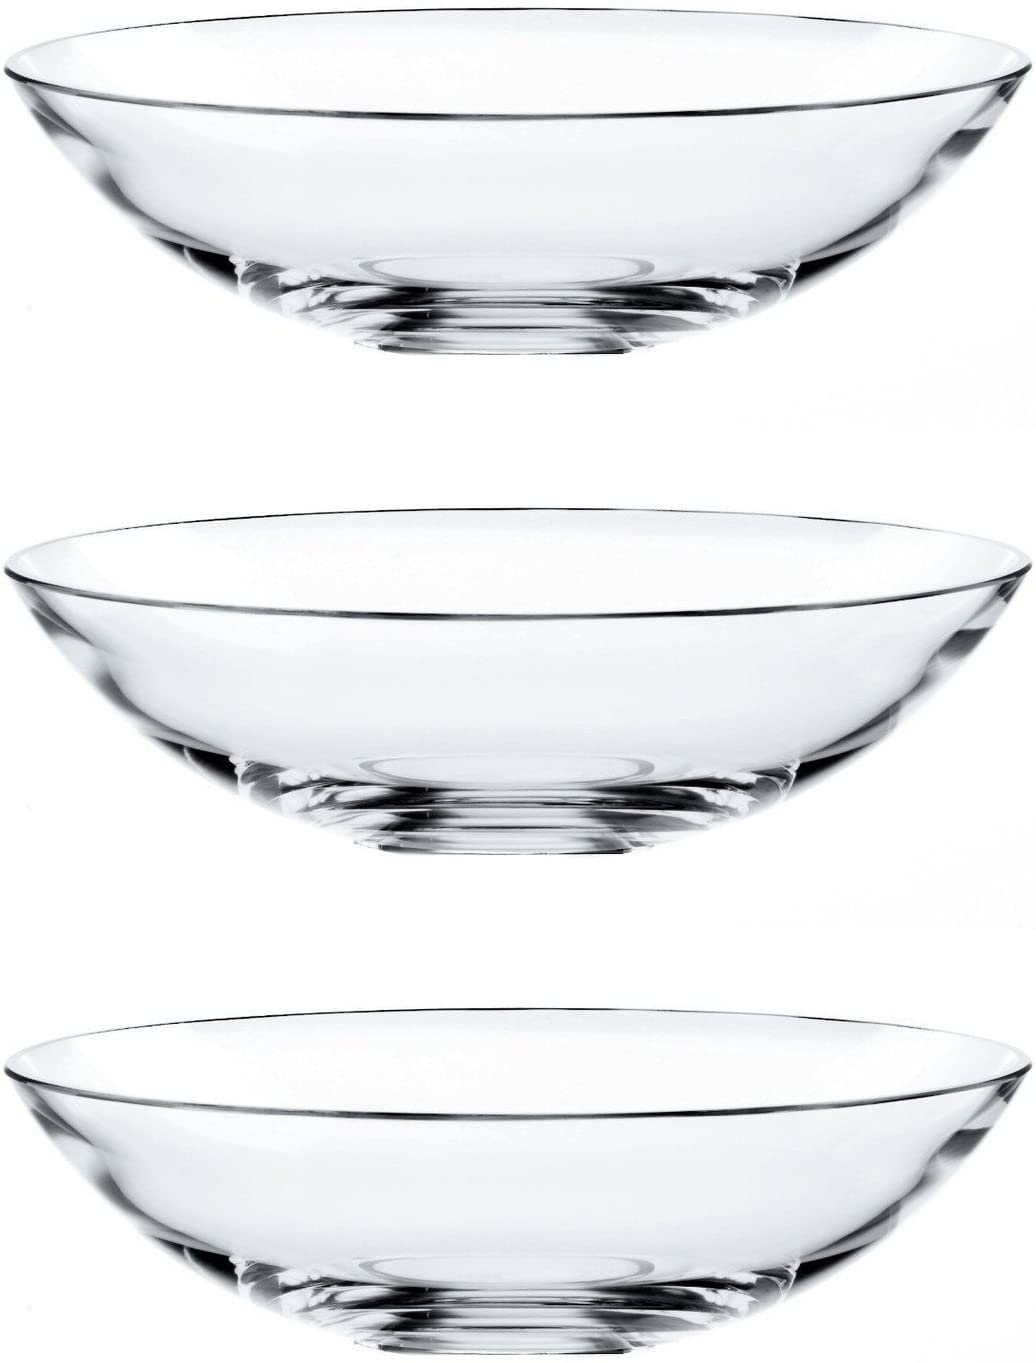 Spiegelau & Nachtmann Nachtmann Vivendi 0081462-0 Glass Bowl, Diameter 17 cm, Clear (Pack of 3)